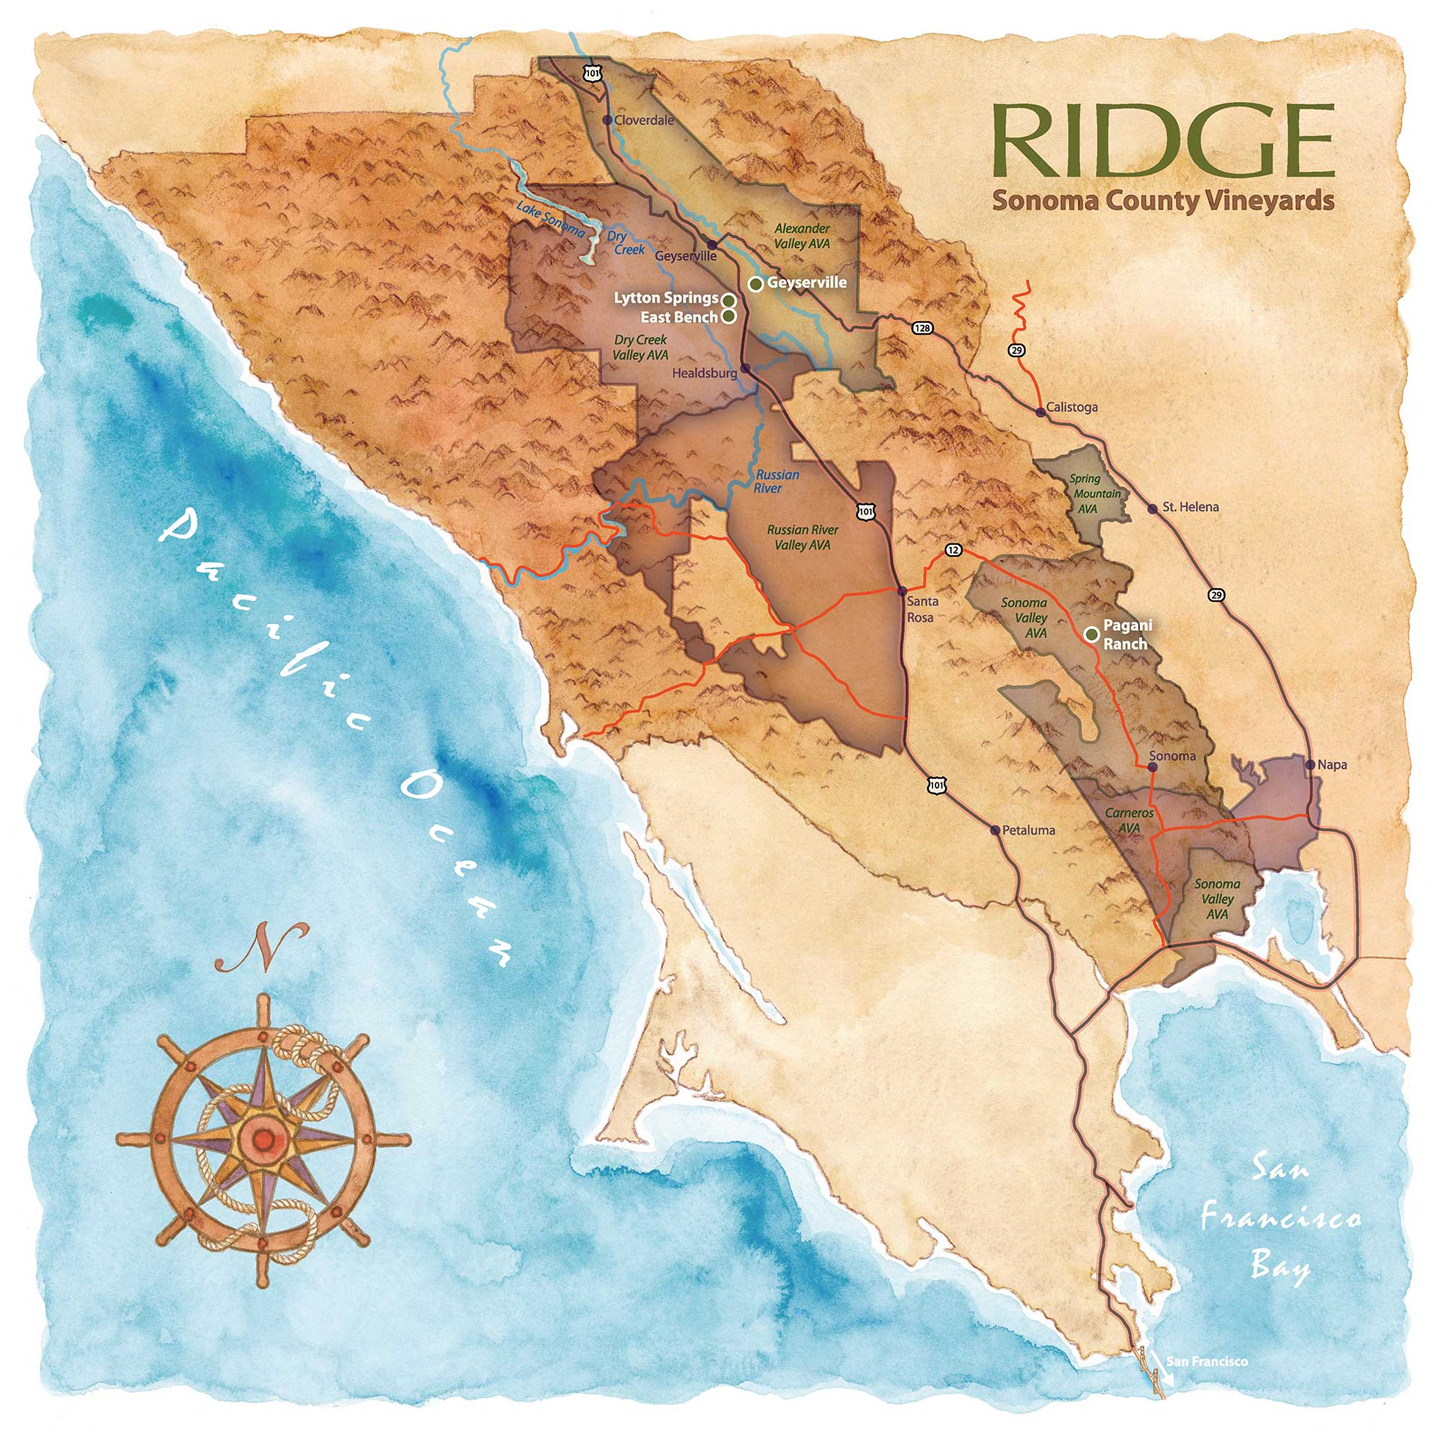 RIDGE Sonoma County Vineyards